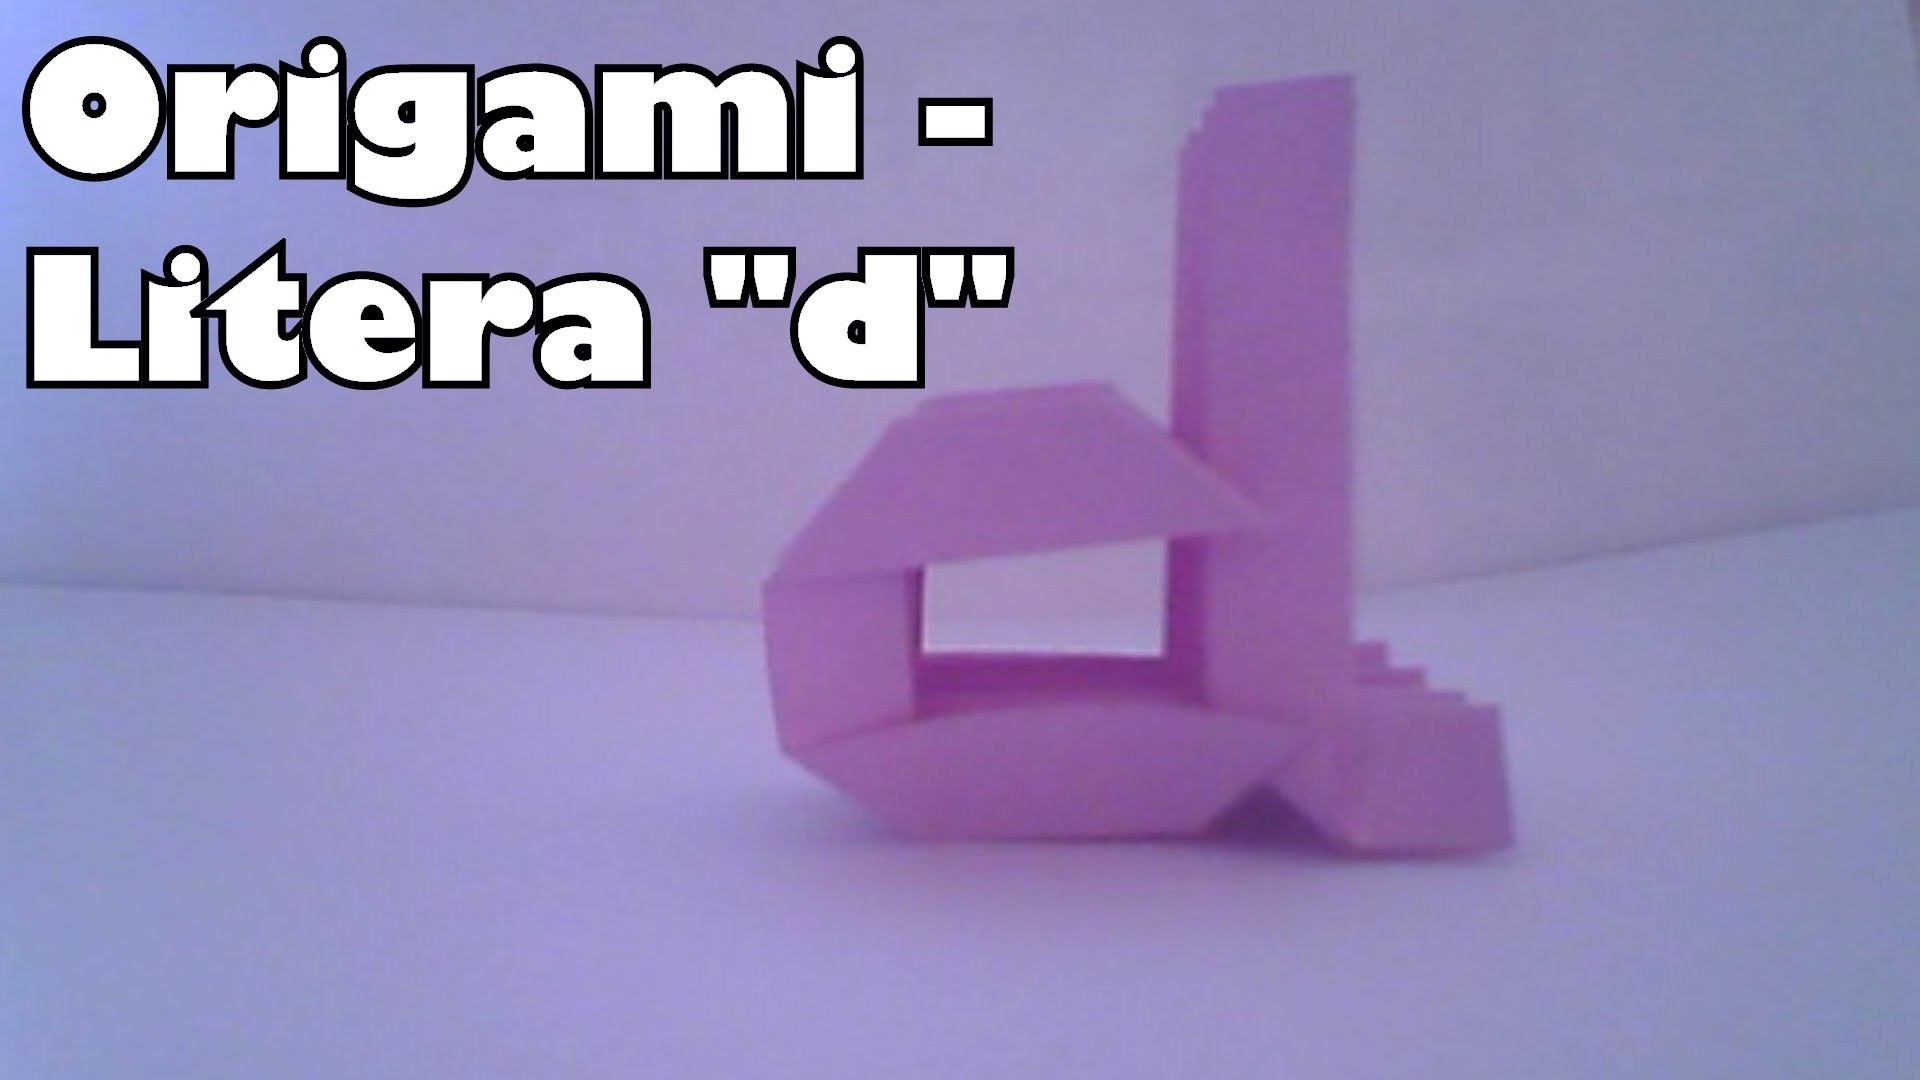 Origami - Litera "d"